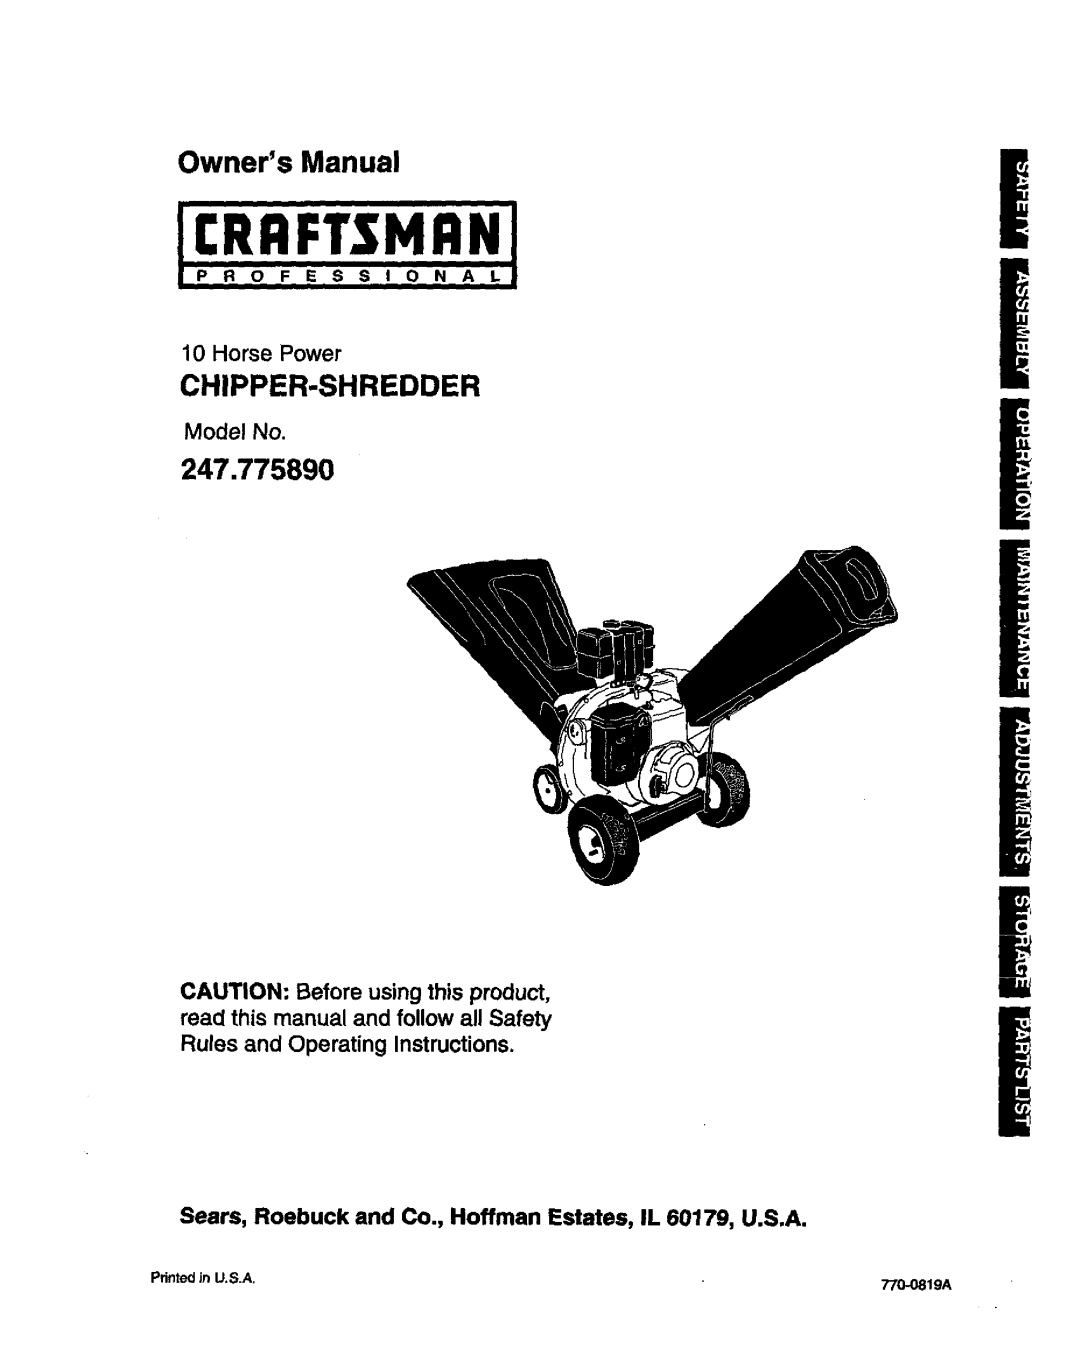 Craftsman 247.775890 manual Owners Manual, Chipper-Shredder 